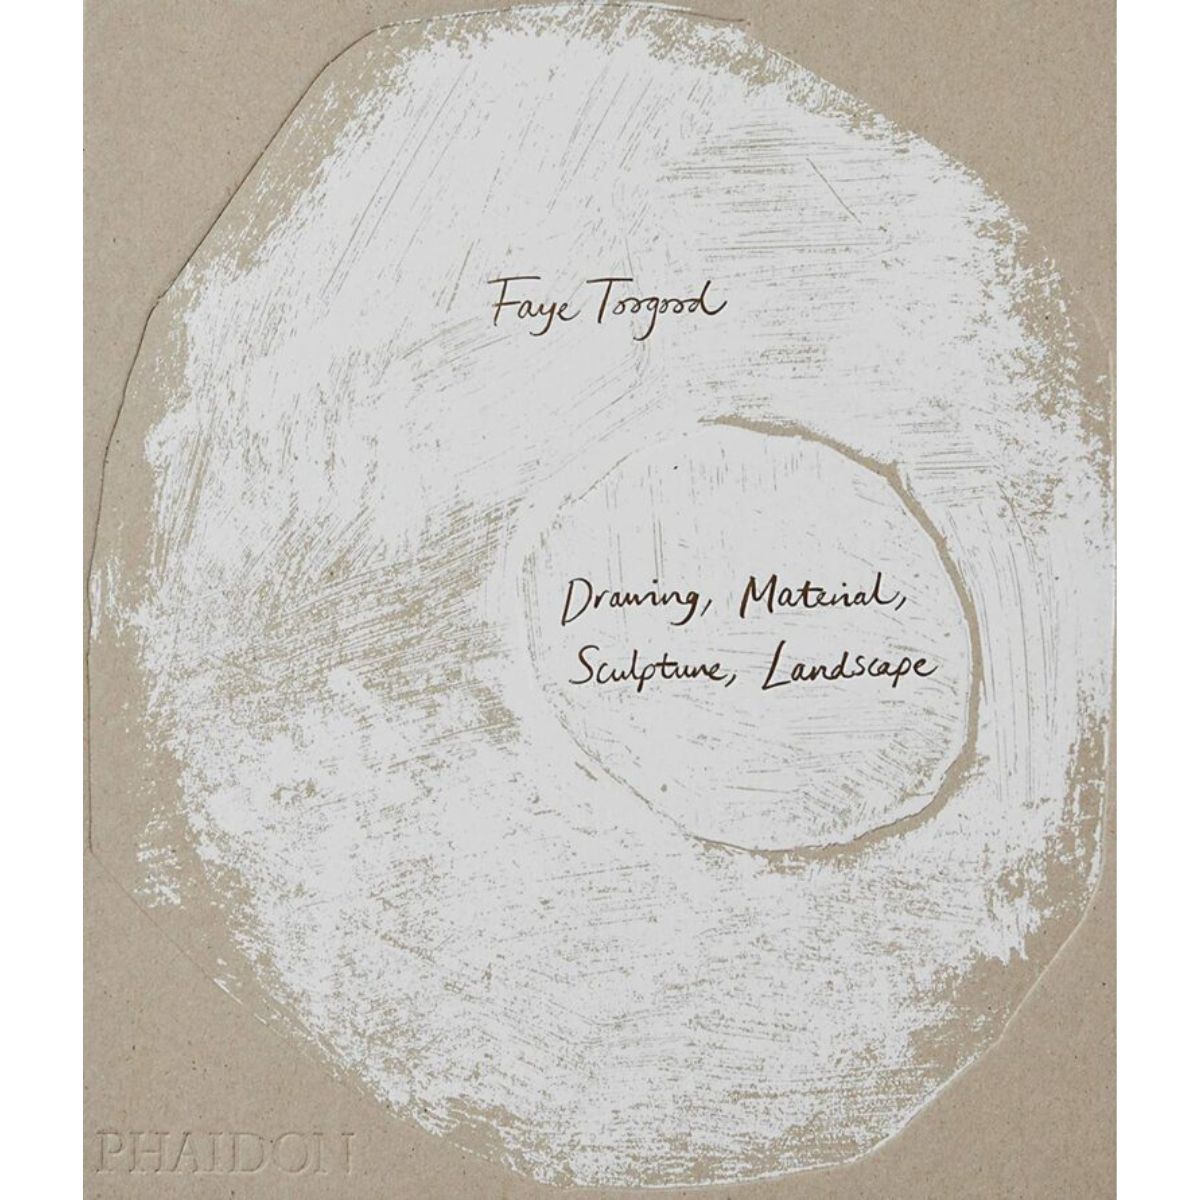 Hintsdeco Books Βιβλίο Τέχνης Βιβλίο Τέχνης Faye Toogood: Drawing, Material, Sculpture, Landscape Μπεζ/Άσπρο 25×2,7×29 cm Hintsdeco